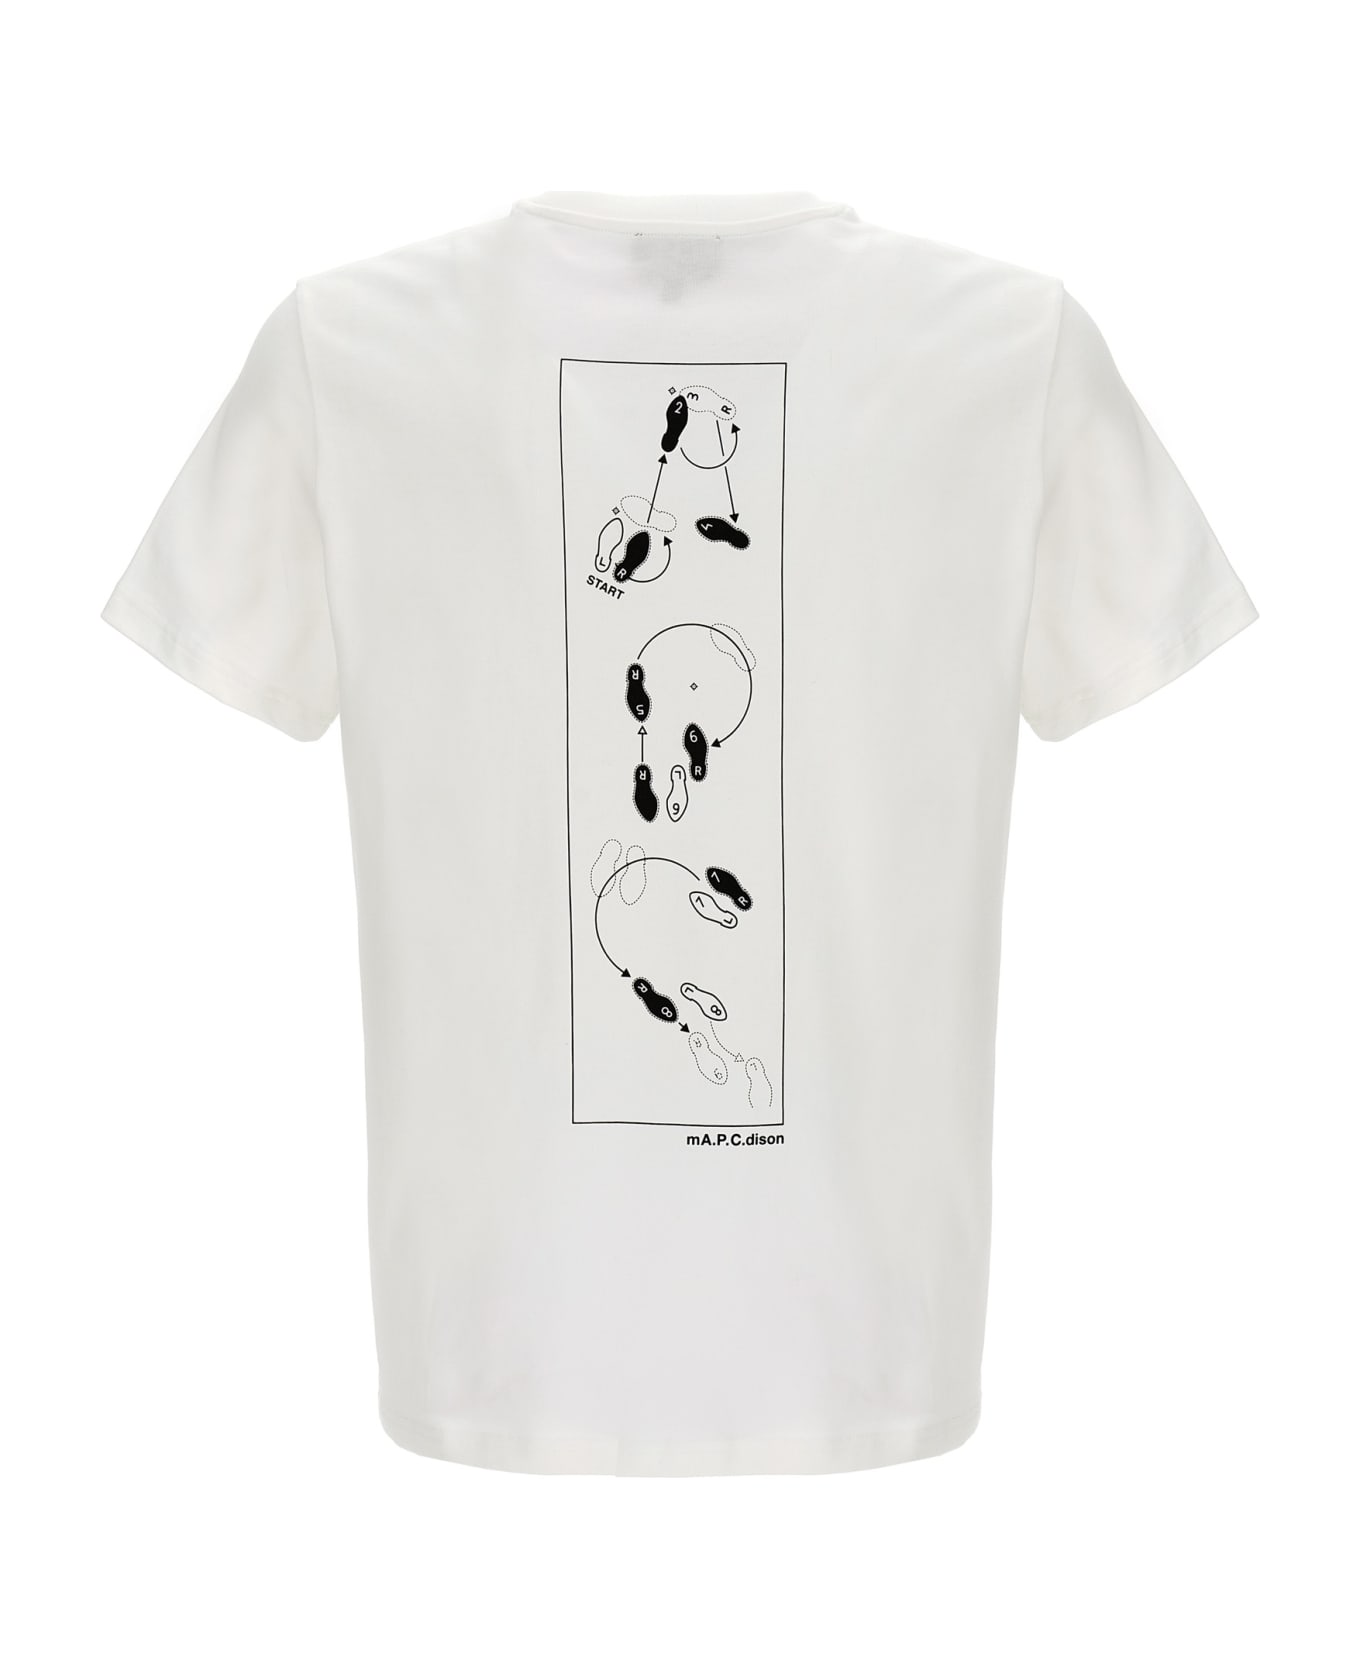 A.P.C. Madison T-shirt - White/Black